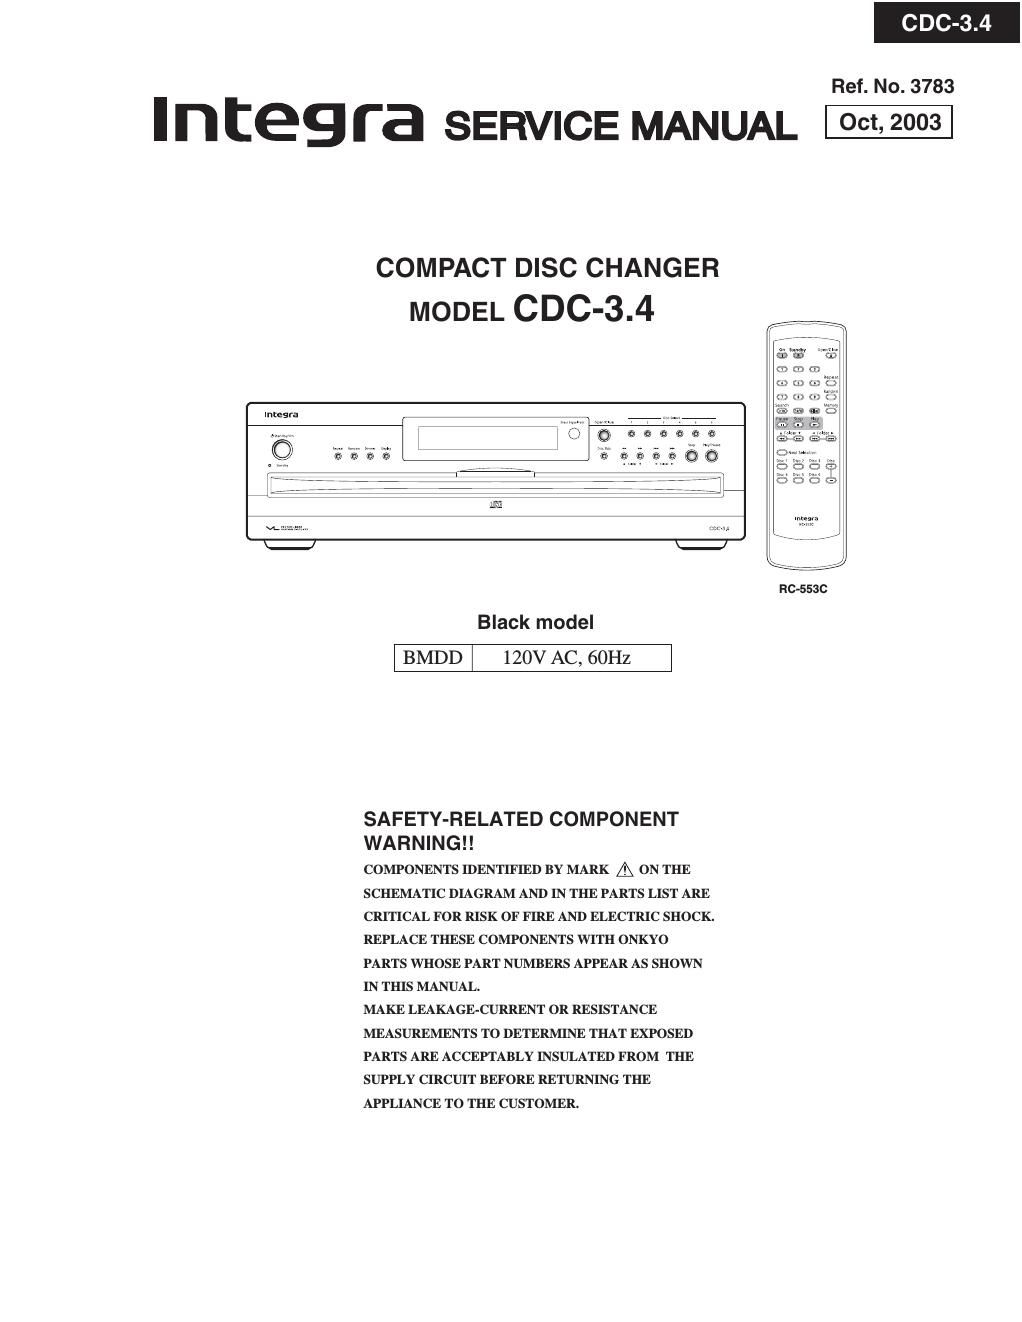 integra cdc 3 4 service manual